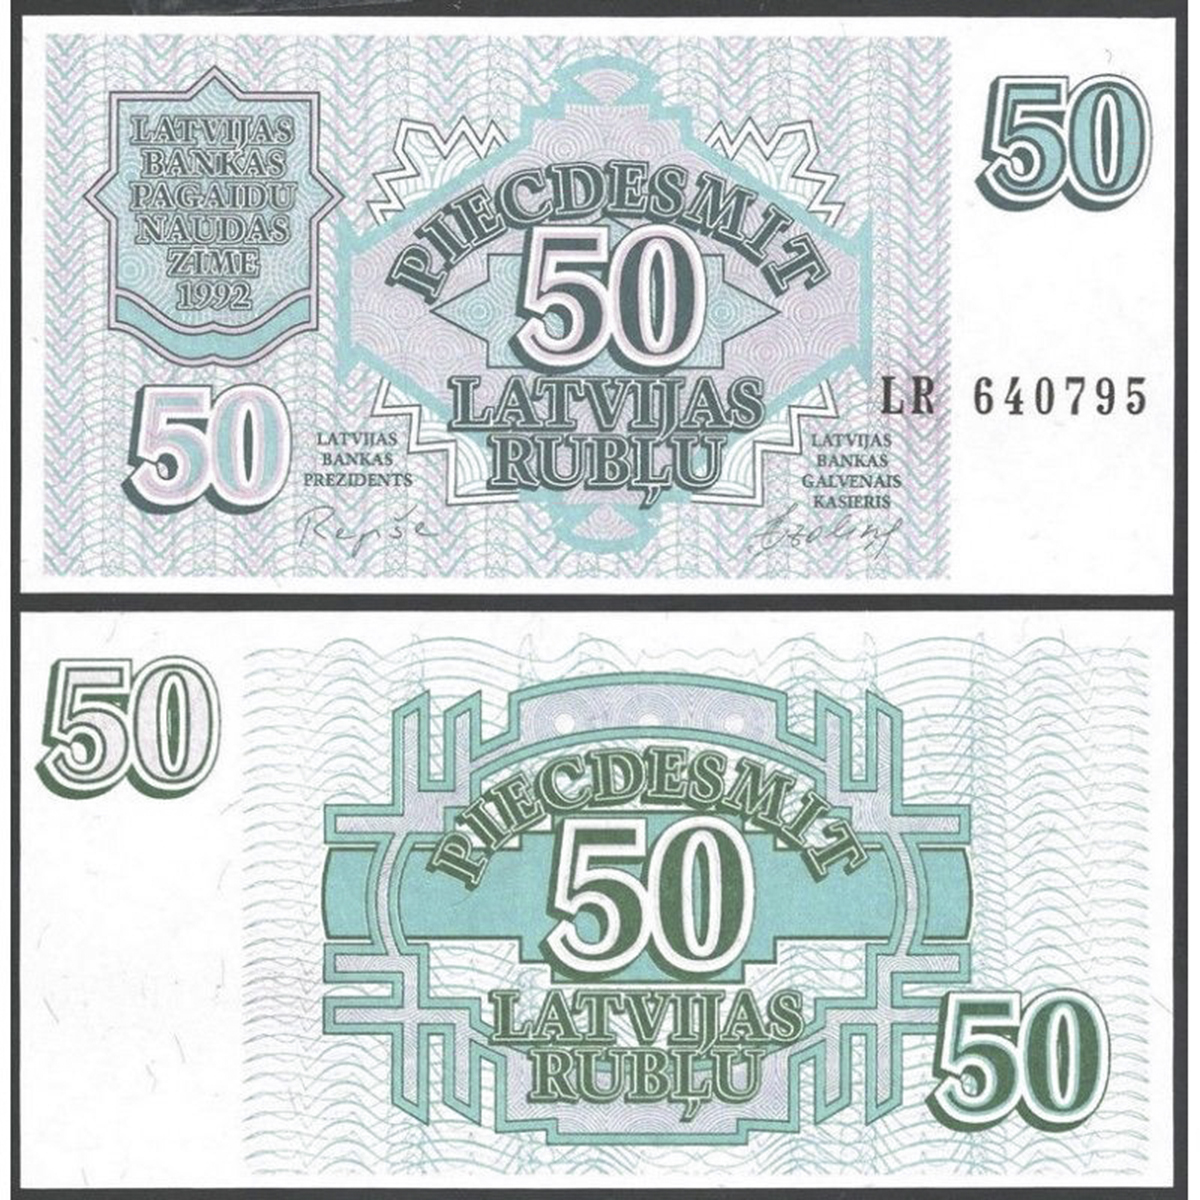 Latvia 50 rublu 1992